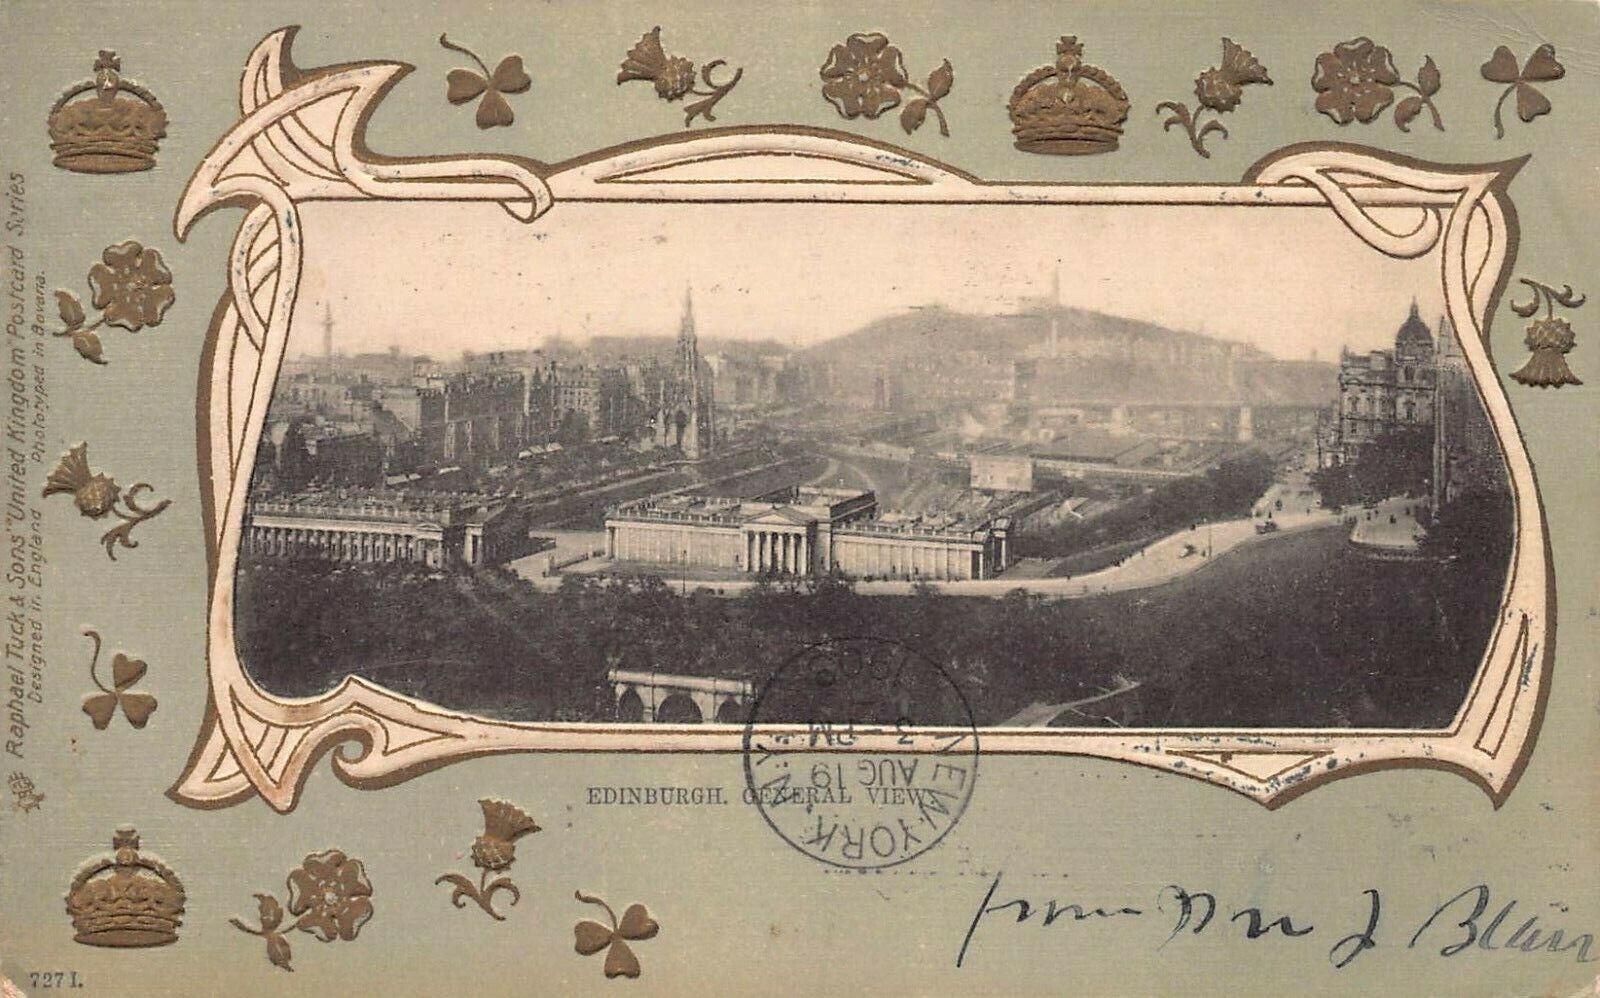 General View of Edinburgh, Scotland, Early Embossed Postcard, Used in 1903